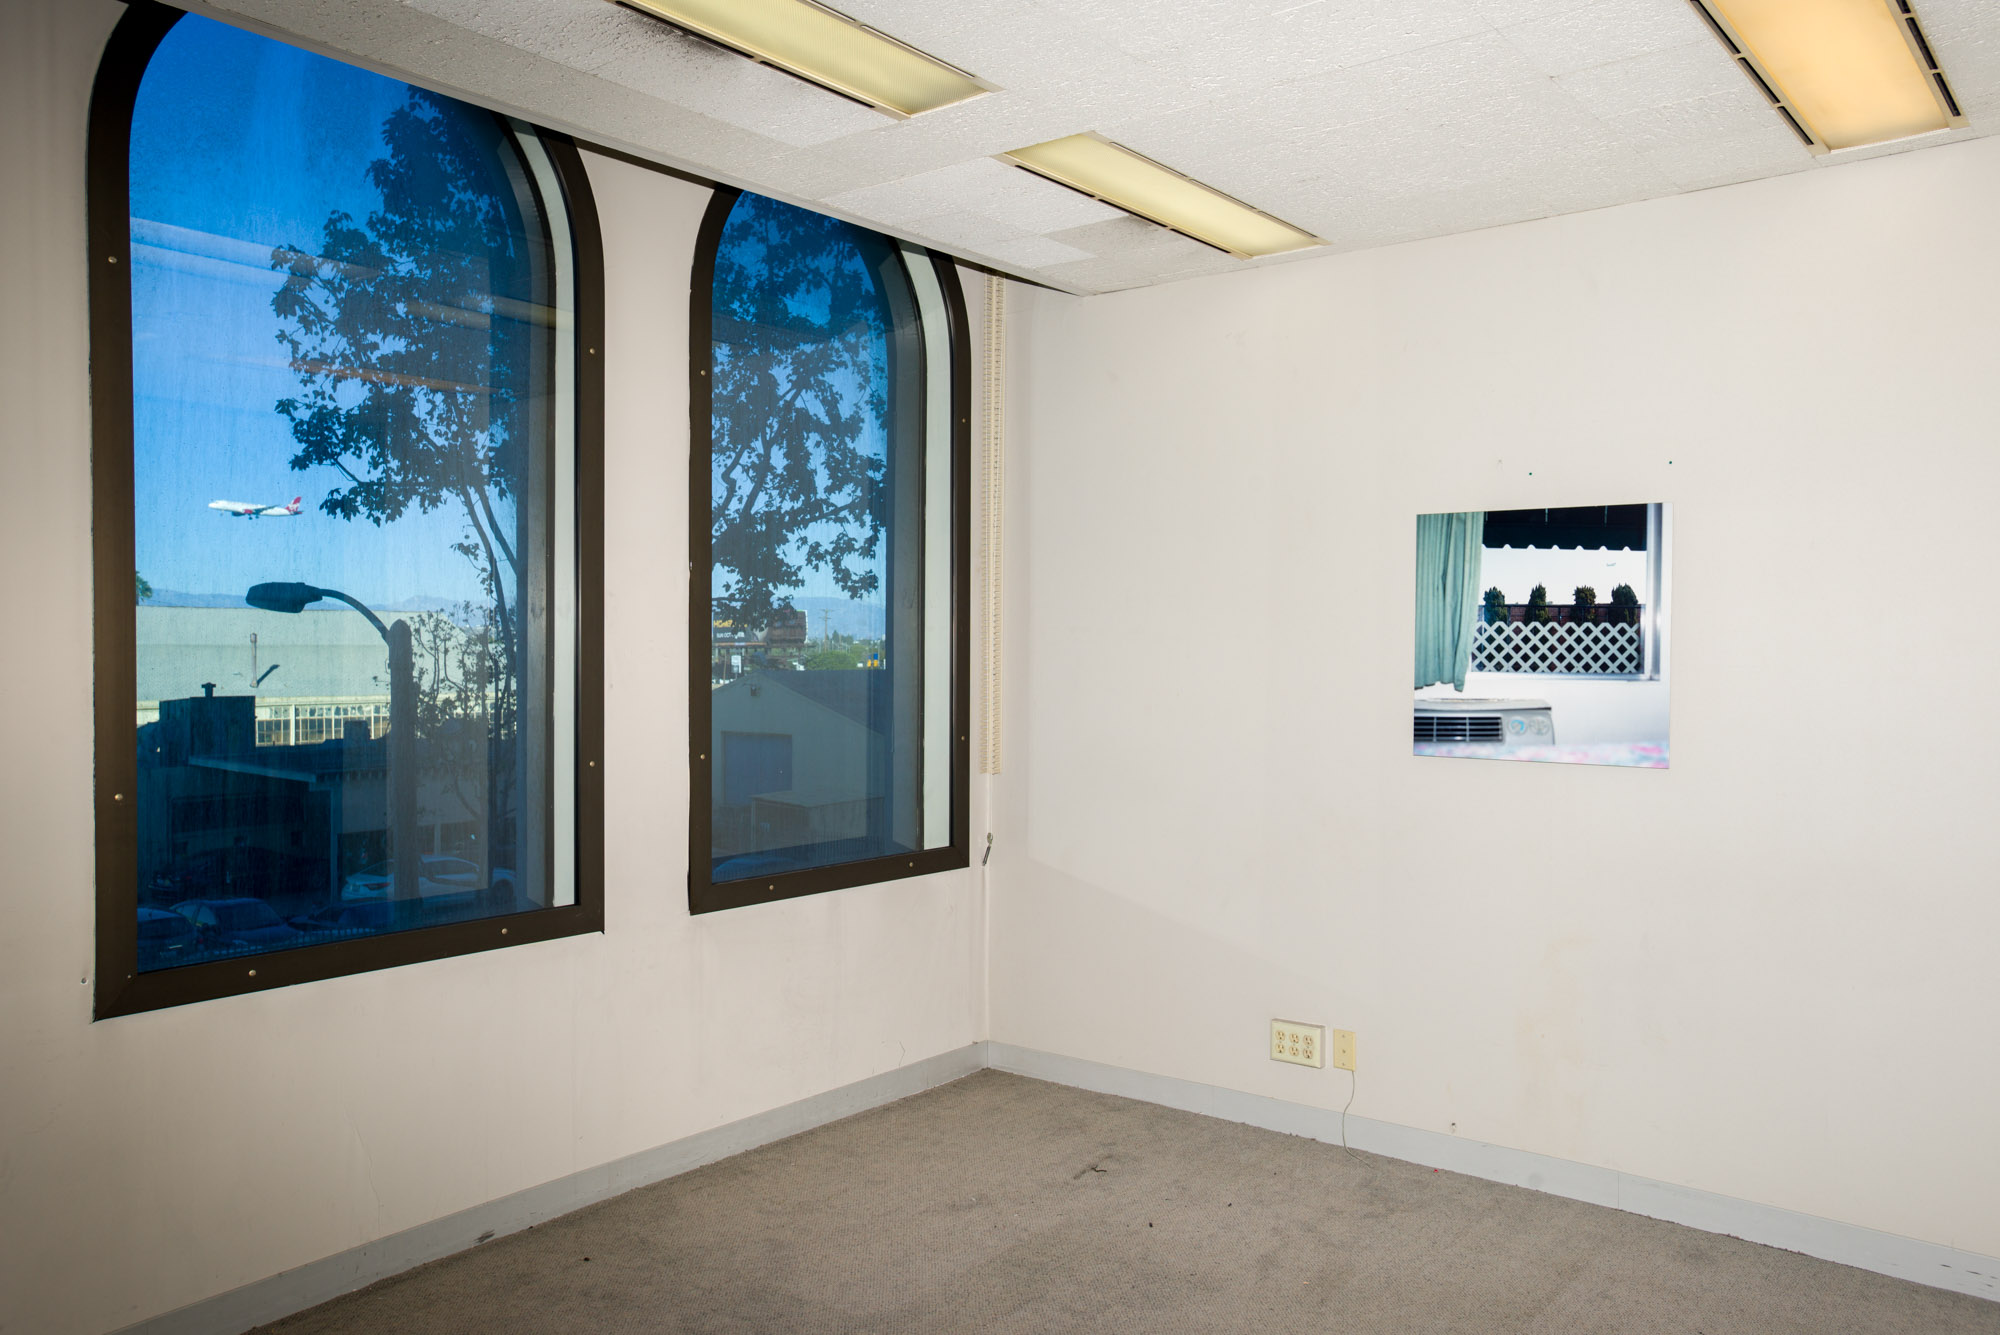 Installation view, 9800, 9800 S. Sepulveda Blvd., Los Angeles, CA, October 2015